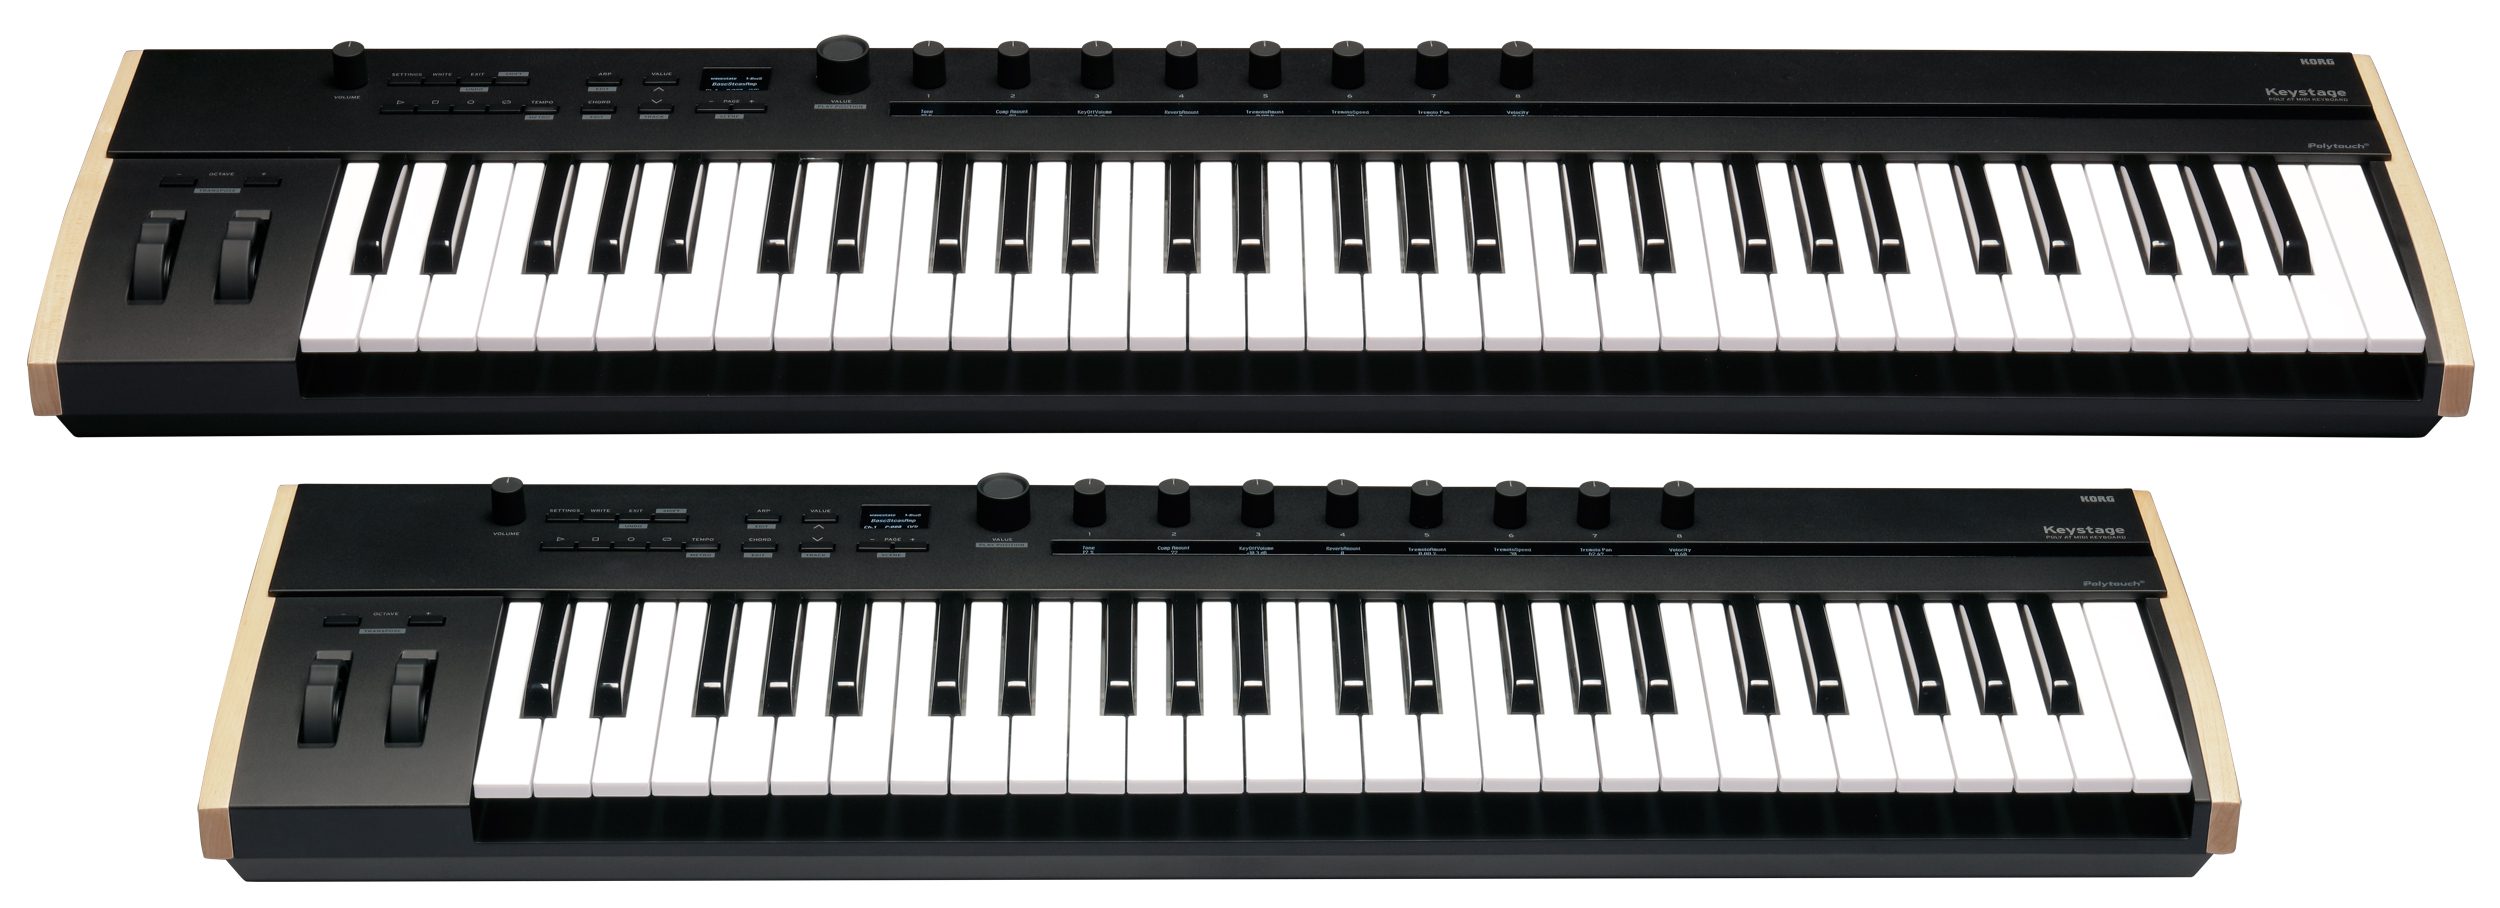 korg keystage 49 61 keyboard controller